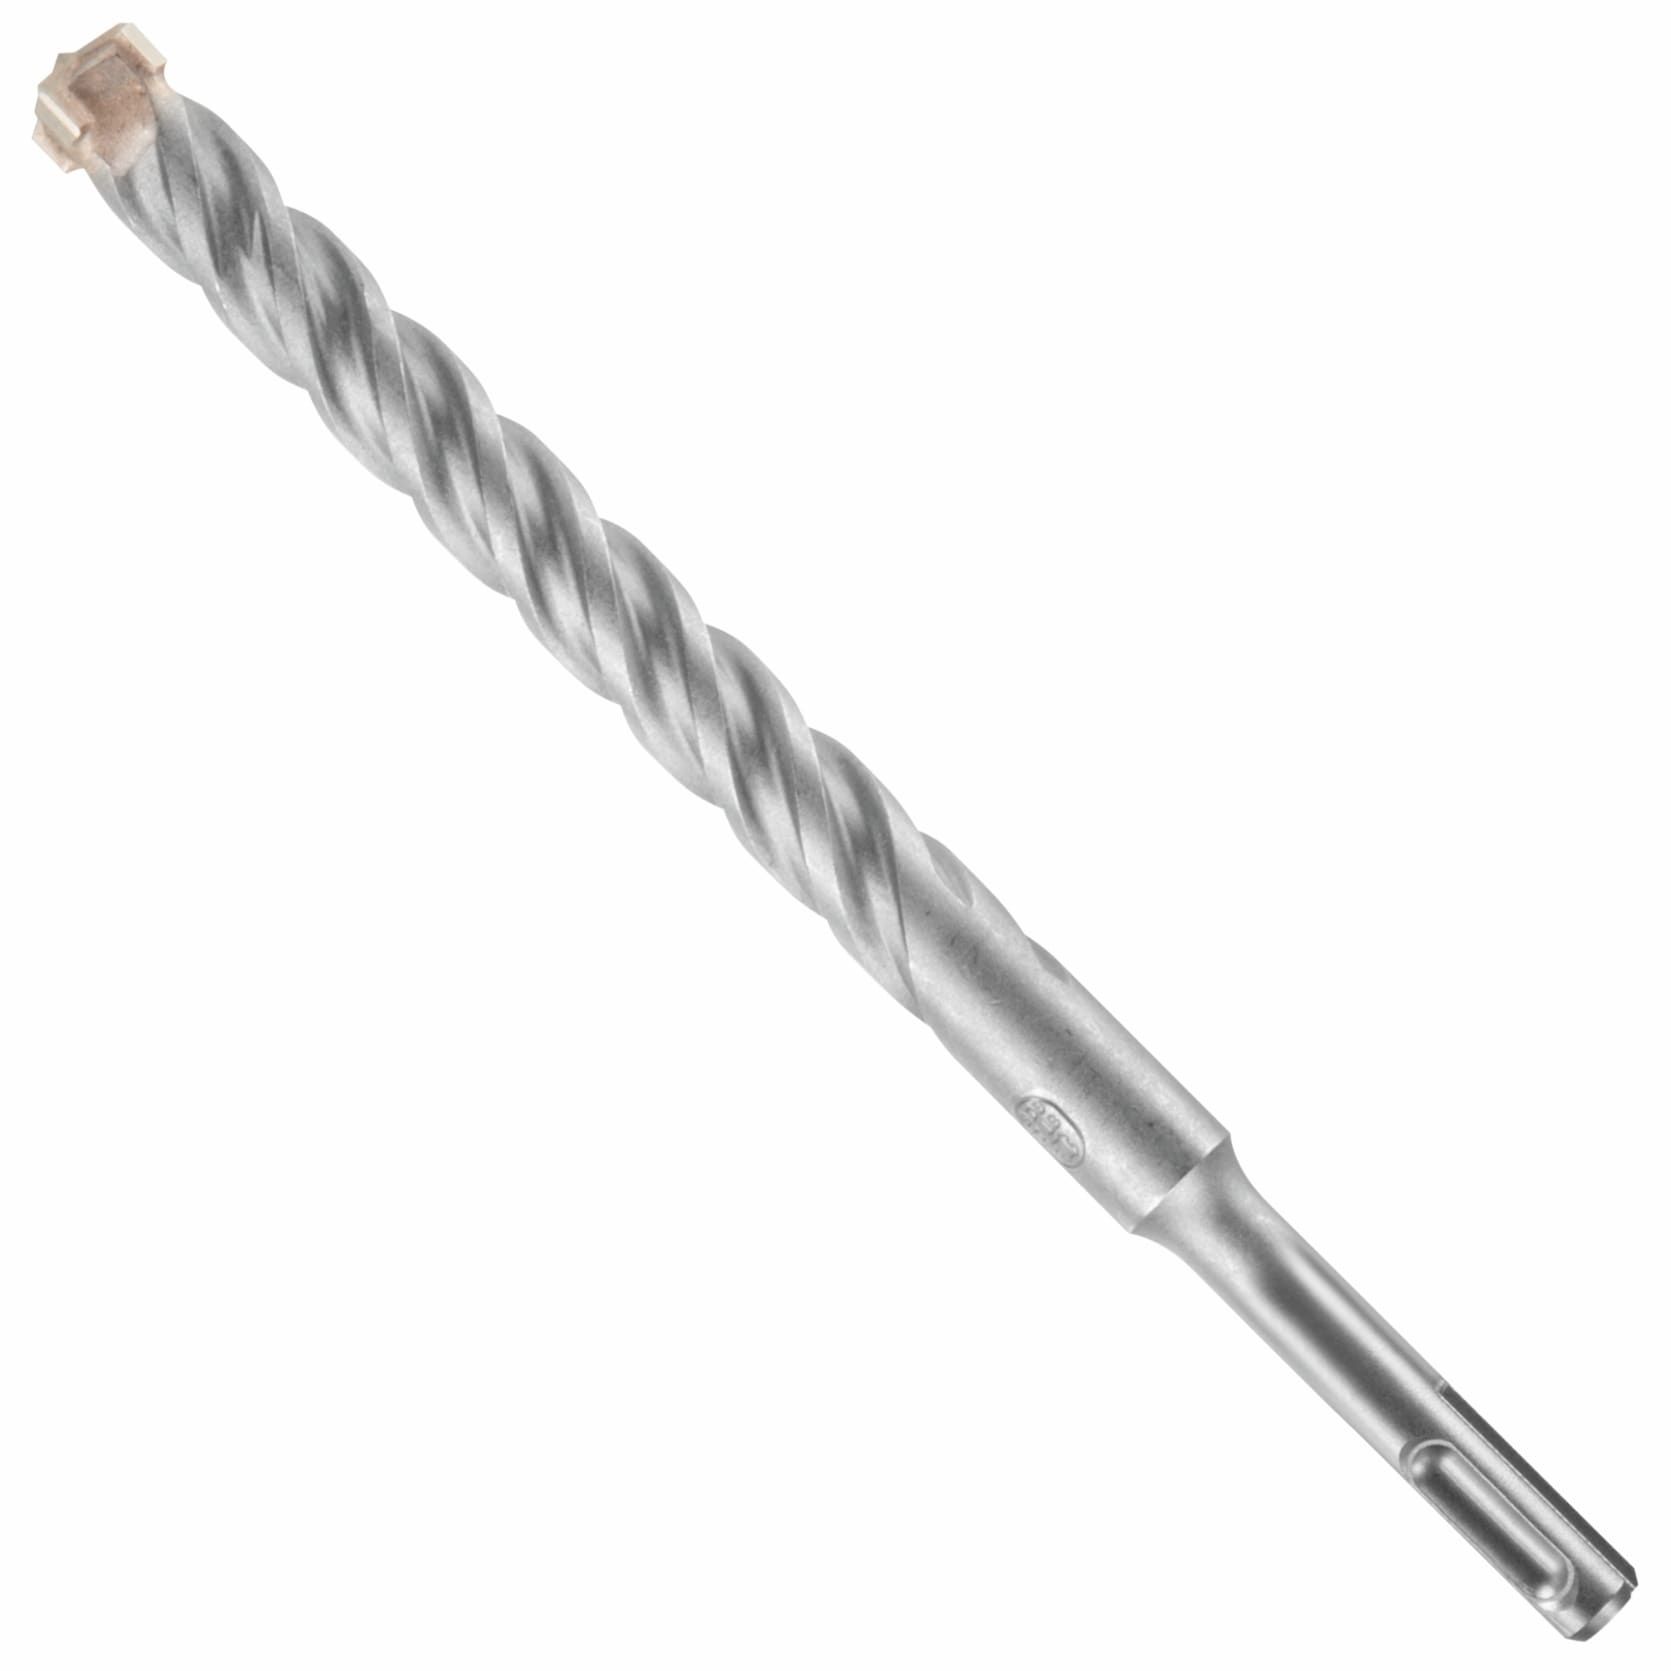 160 X 8 mm SDS Rotary Hammer Concrete Masonry Drill Bit Round Shank Carbide Tip 